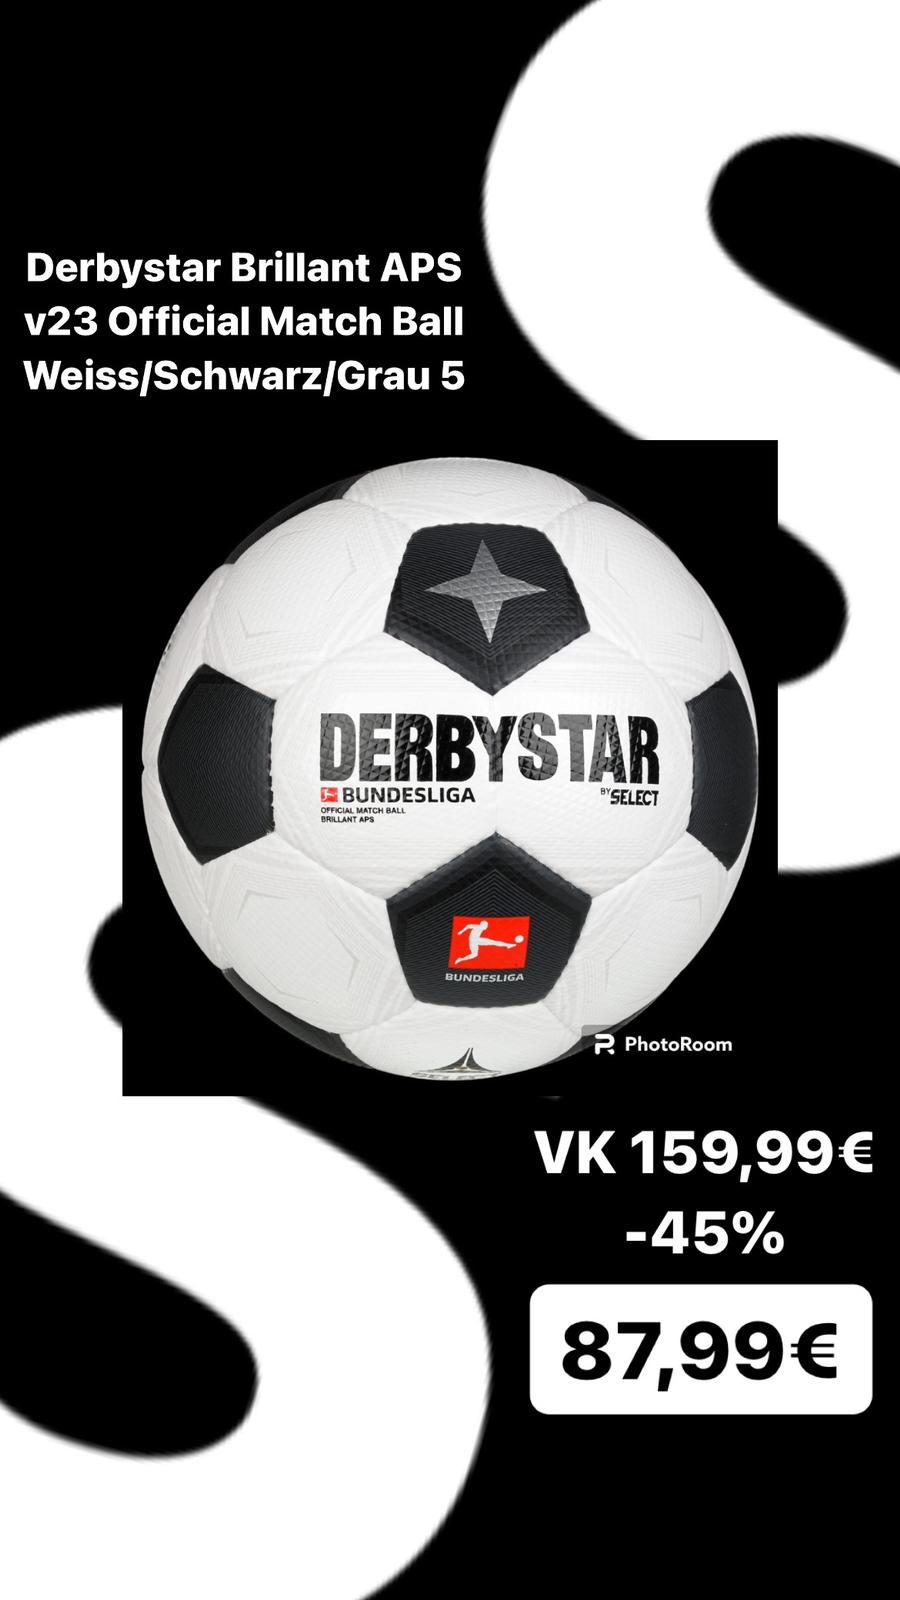 Derbystar Brillant APS v23 Official Matsch Ball weiß-shwarz